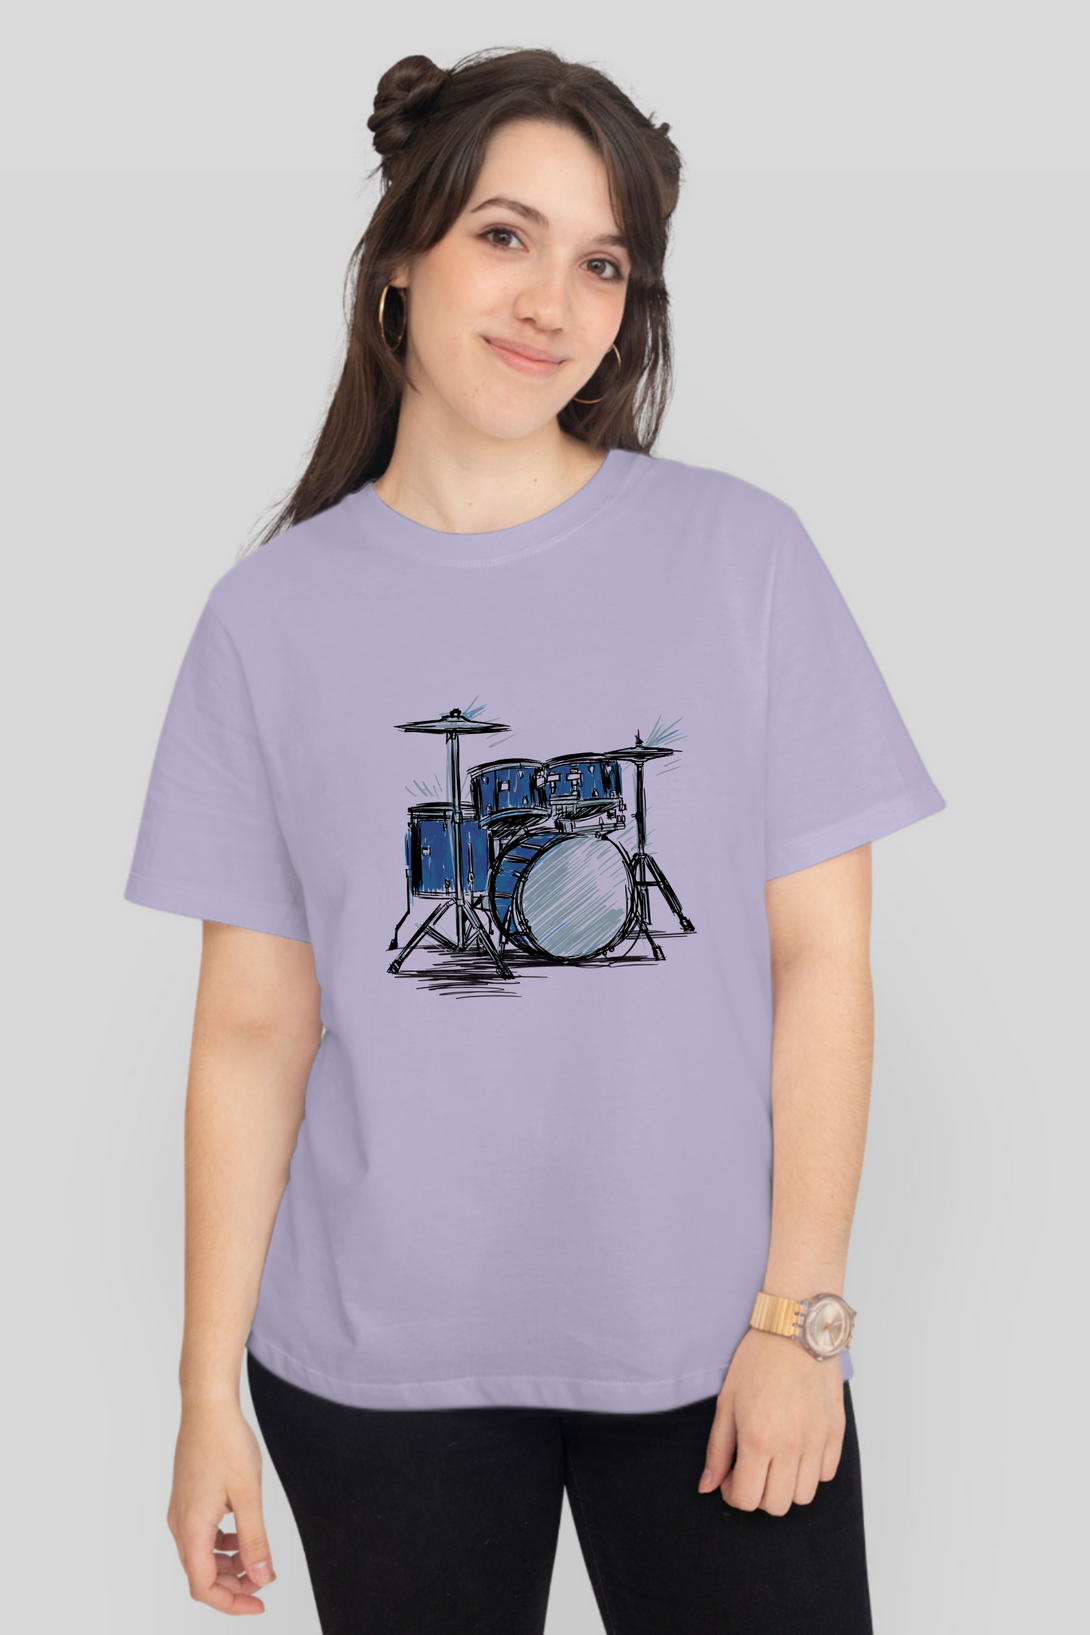 Rhythmic Beats Printed T-Shirt For Women - WowWaves - 9